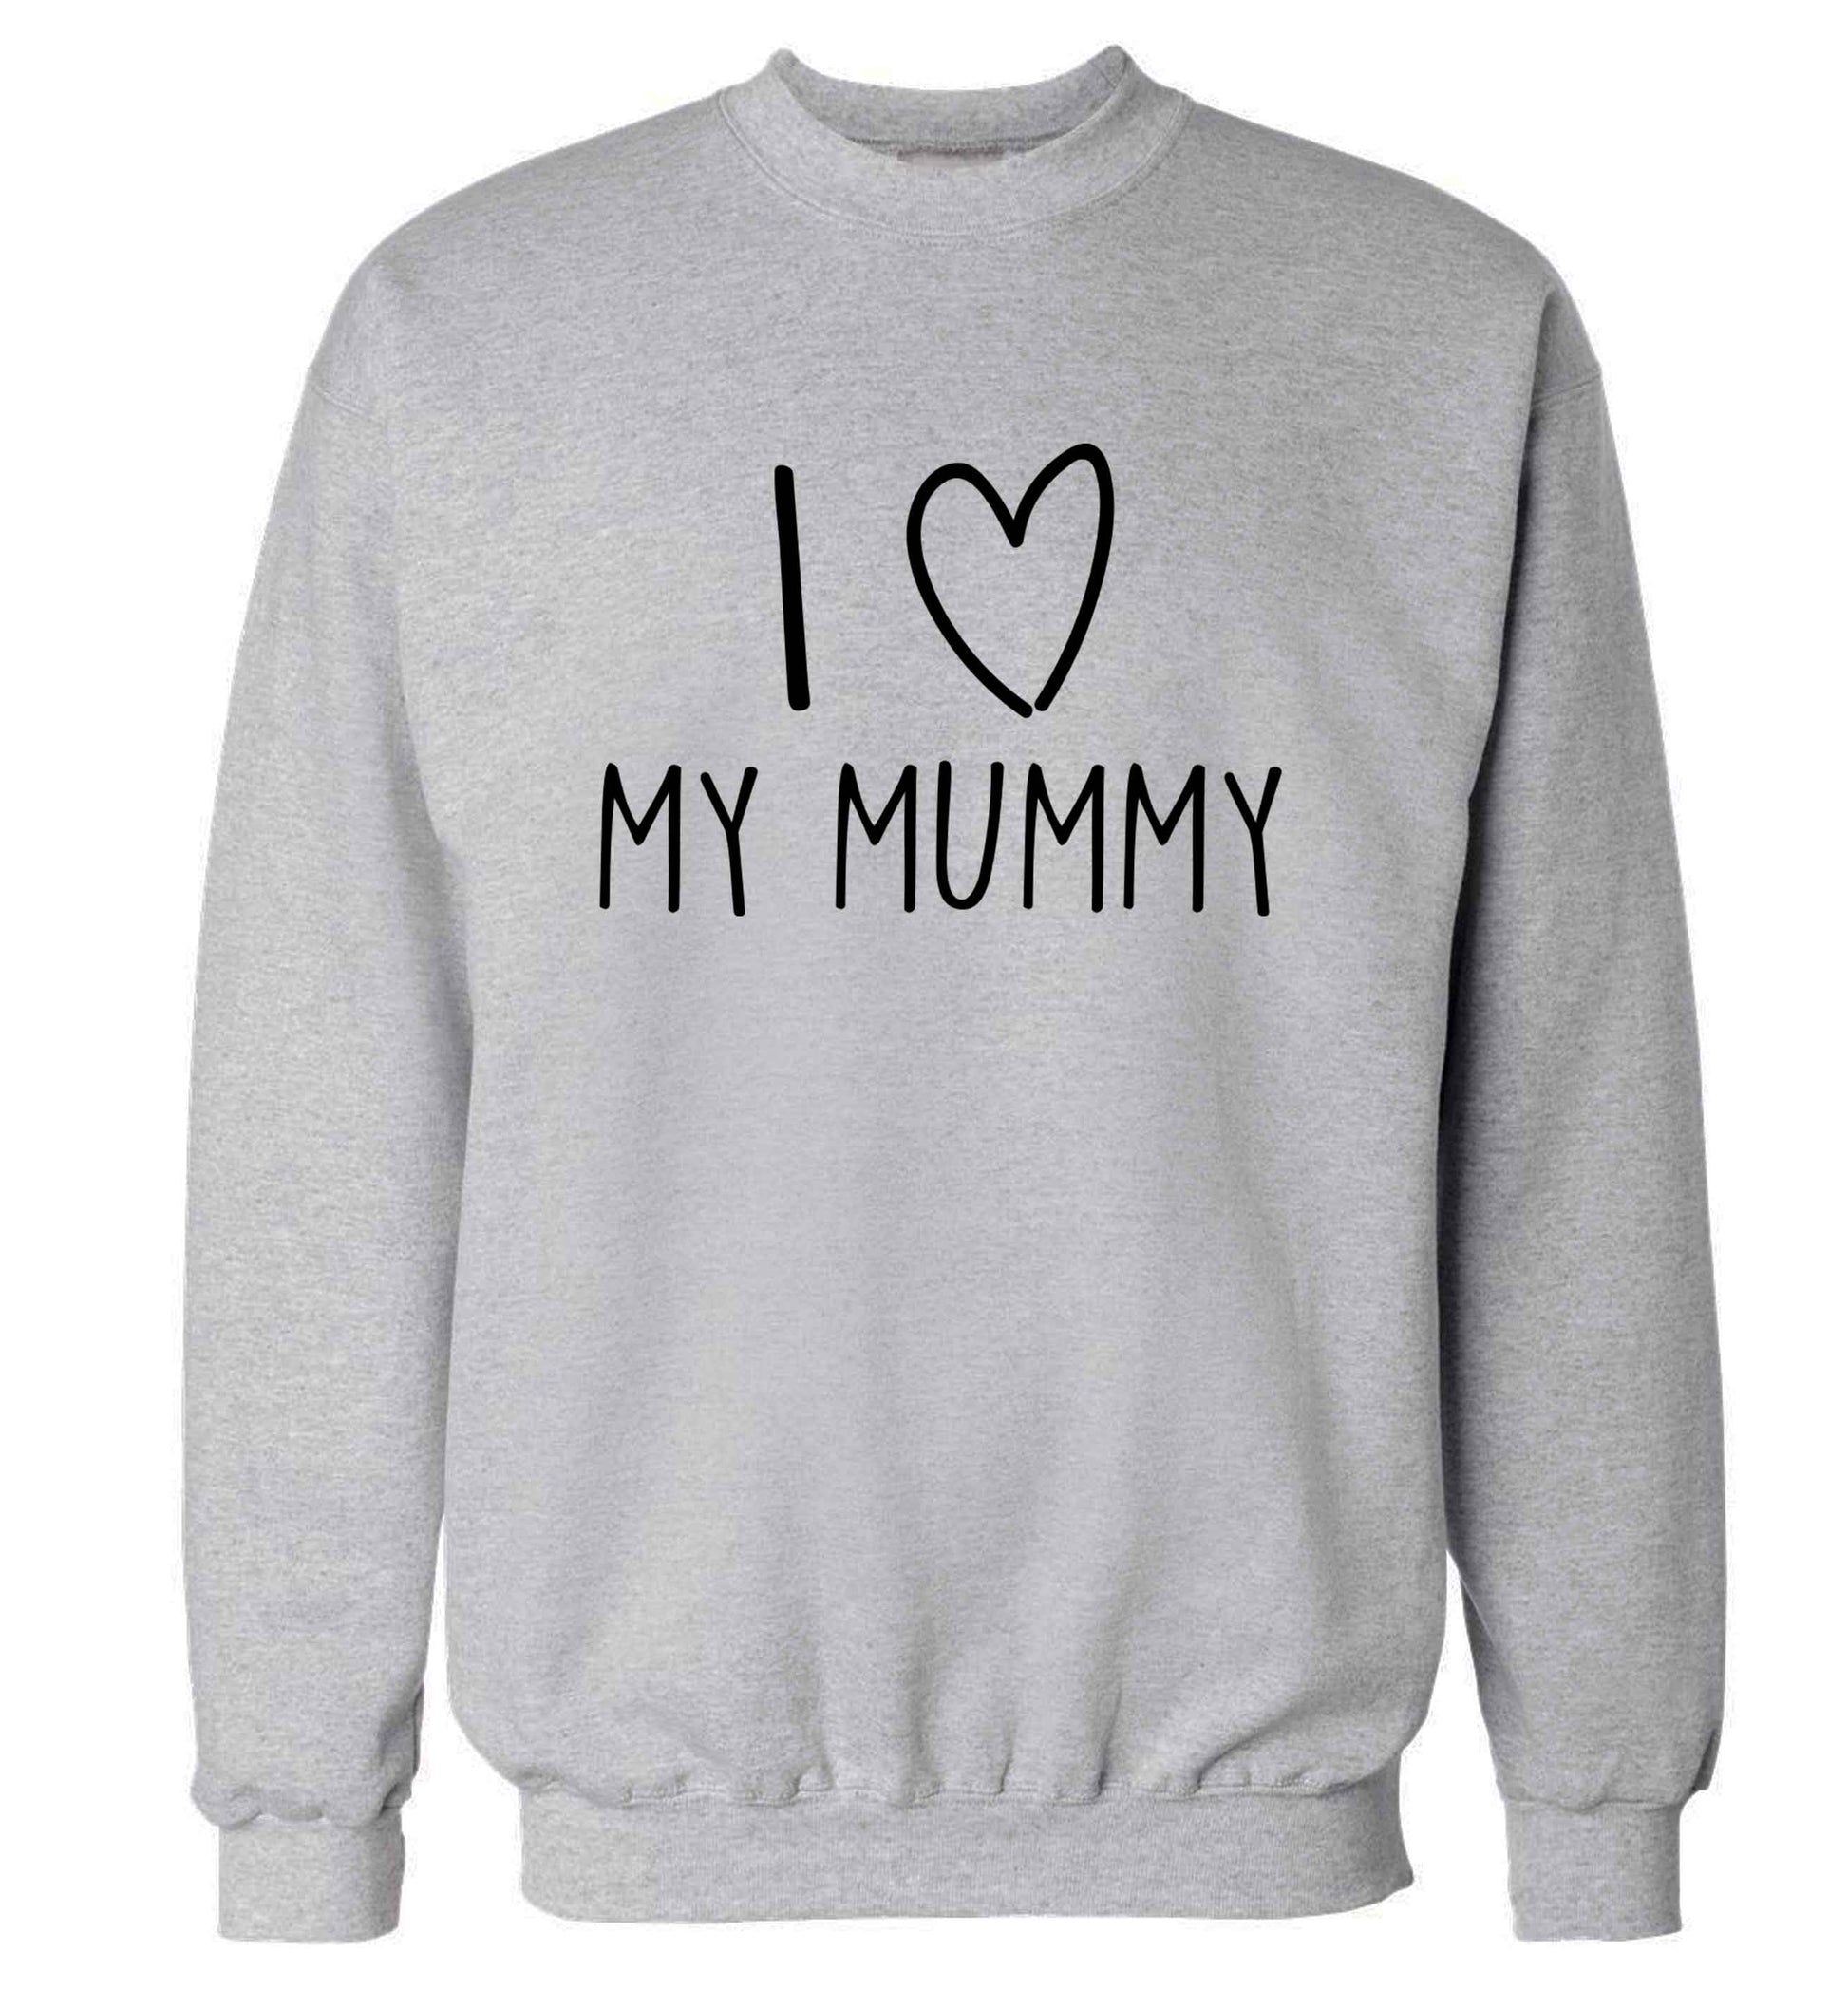 I love my mummy adult's unisex grey sweater 2XL